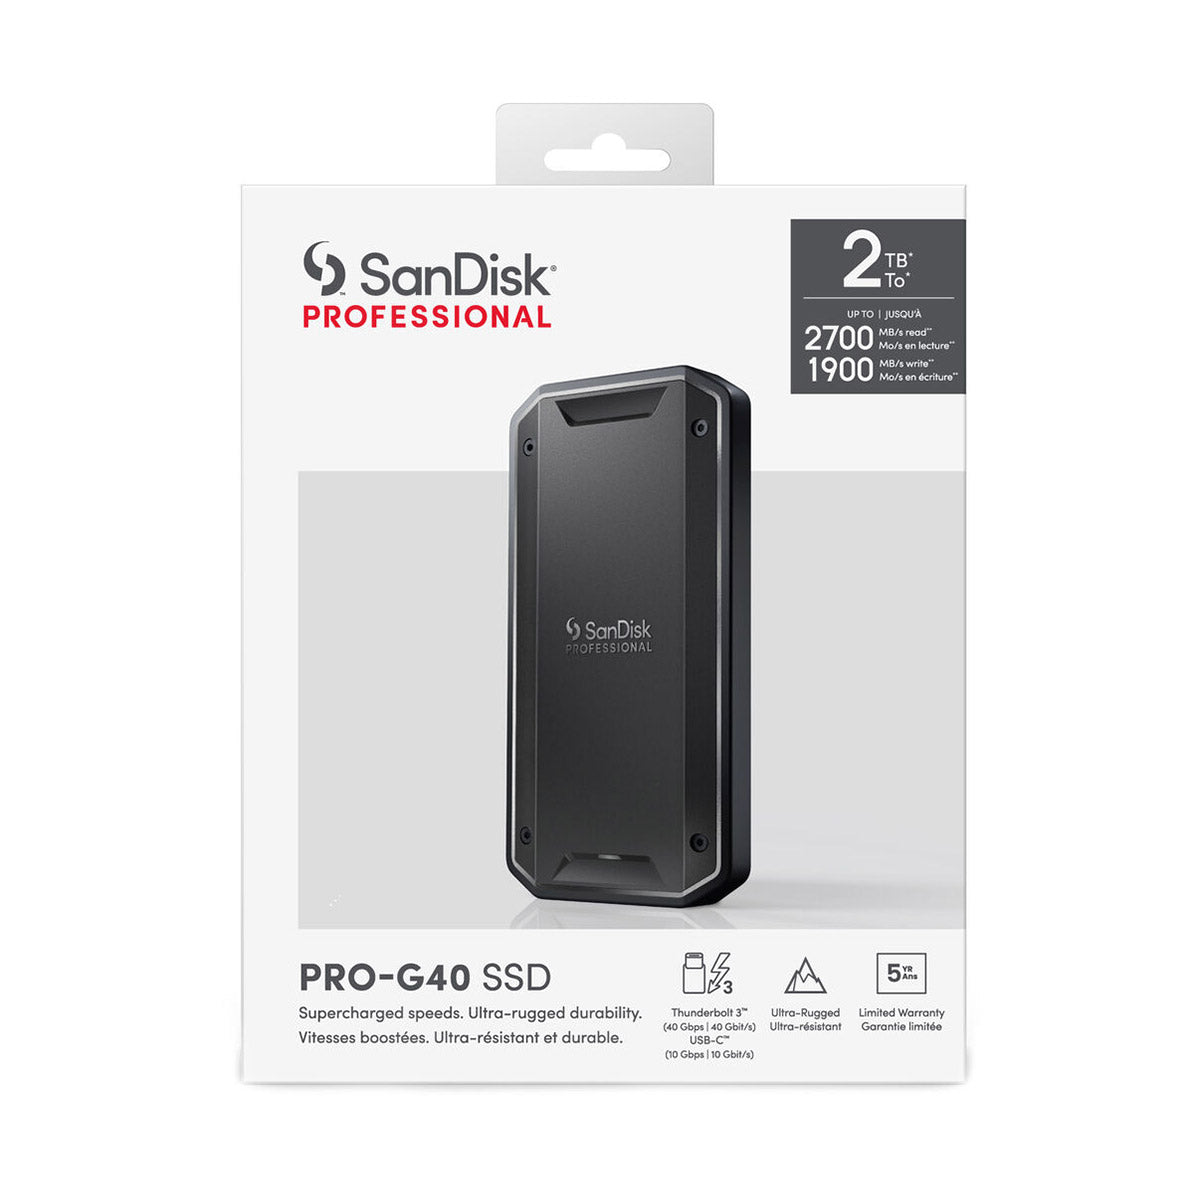 SanDisk Professional 2TB PRO-G40 SSD Thunderbolt 3/USB-C